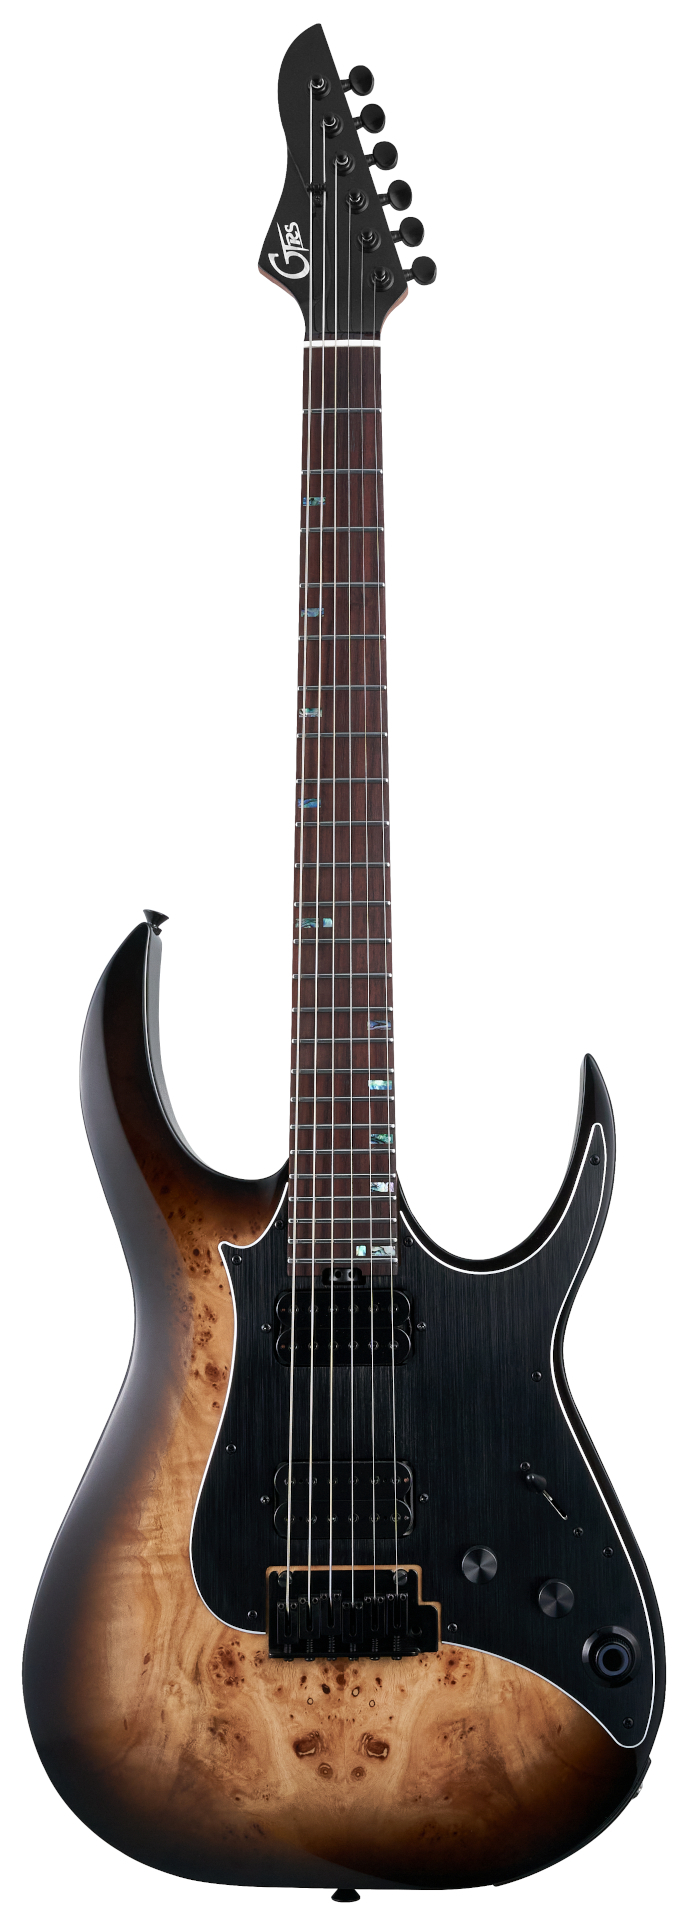 GTRS Modern 810 Intelligent Guitar (M810) - Natural Burst